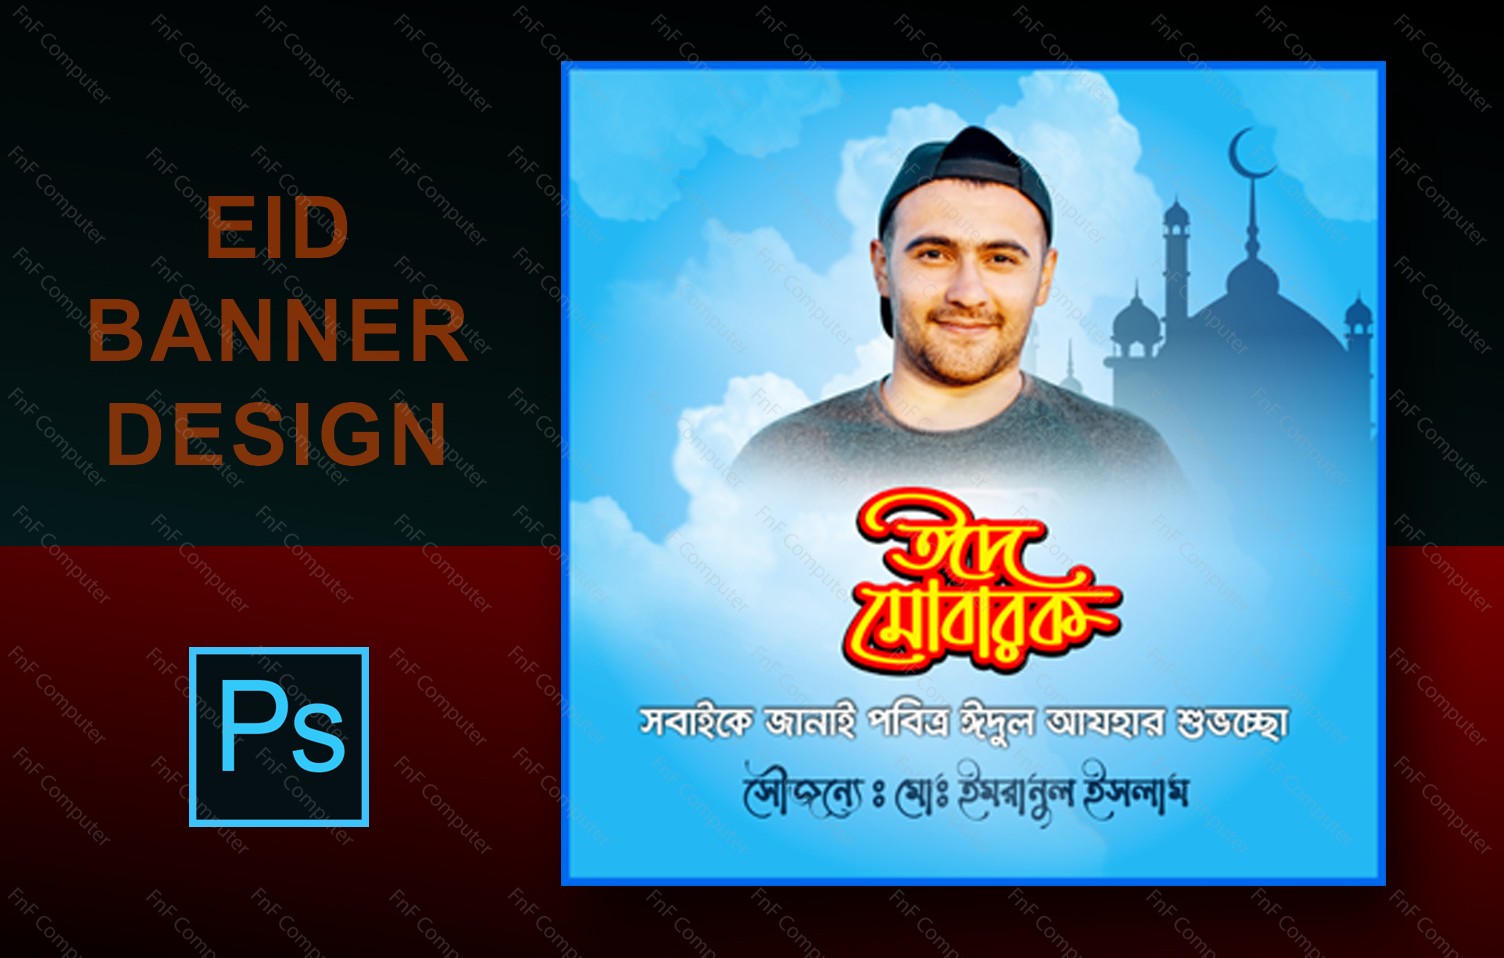 Eid Social Media Banner Design 2021 Eid Mubarak